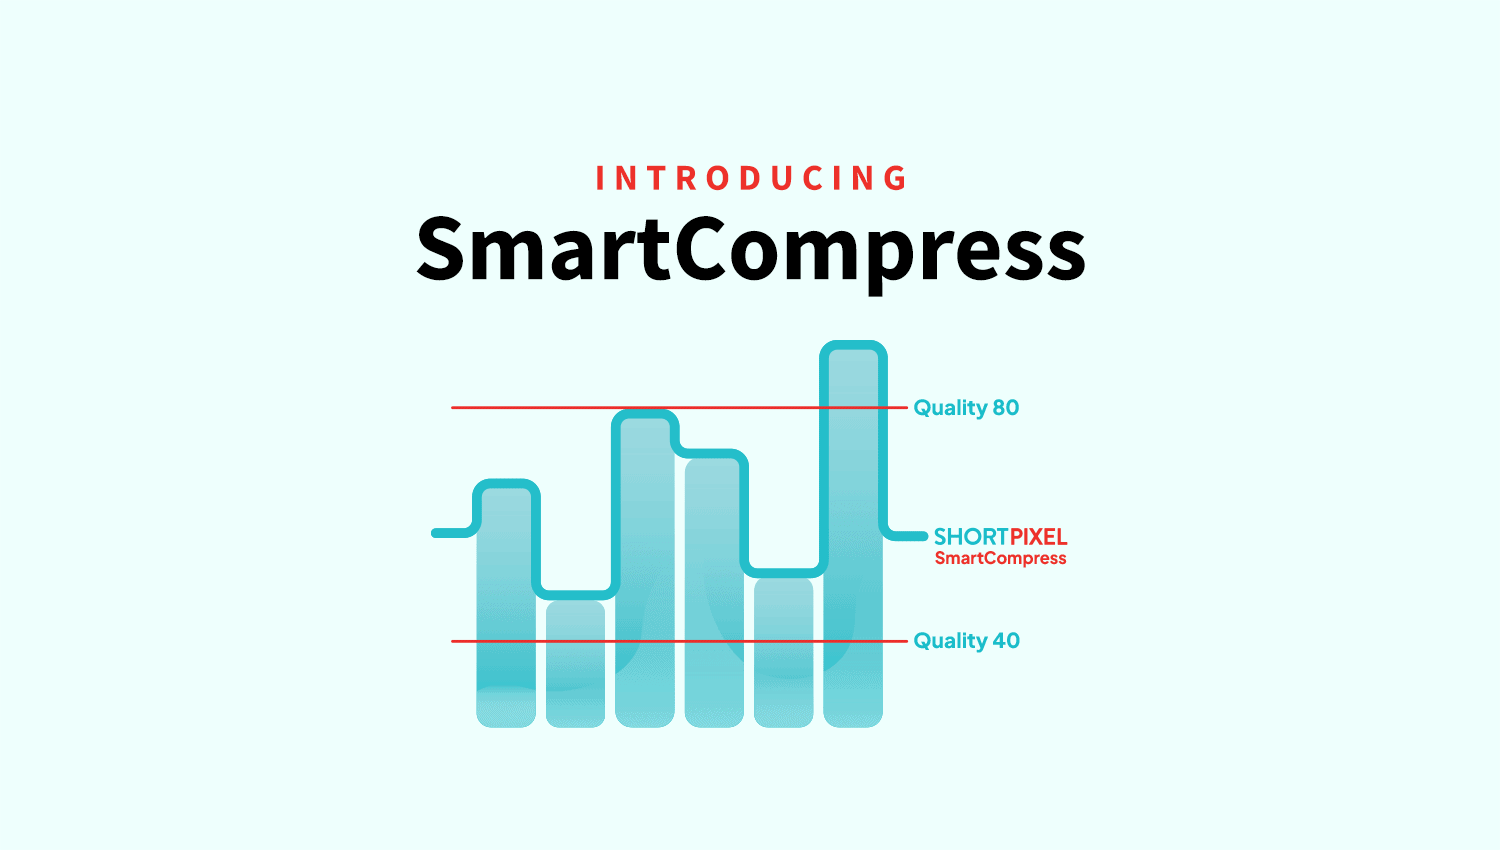 SmartCompress